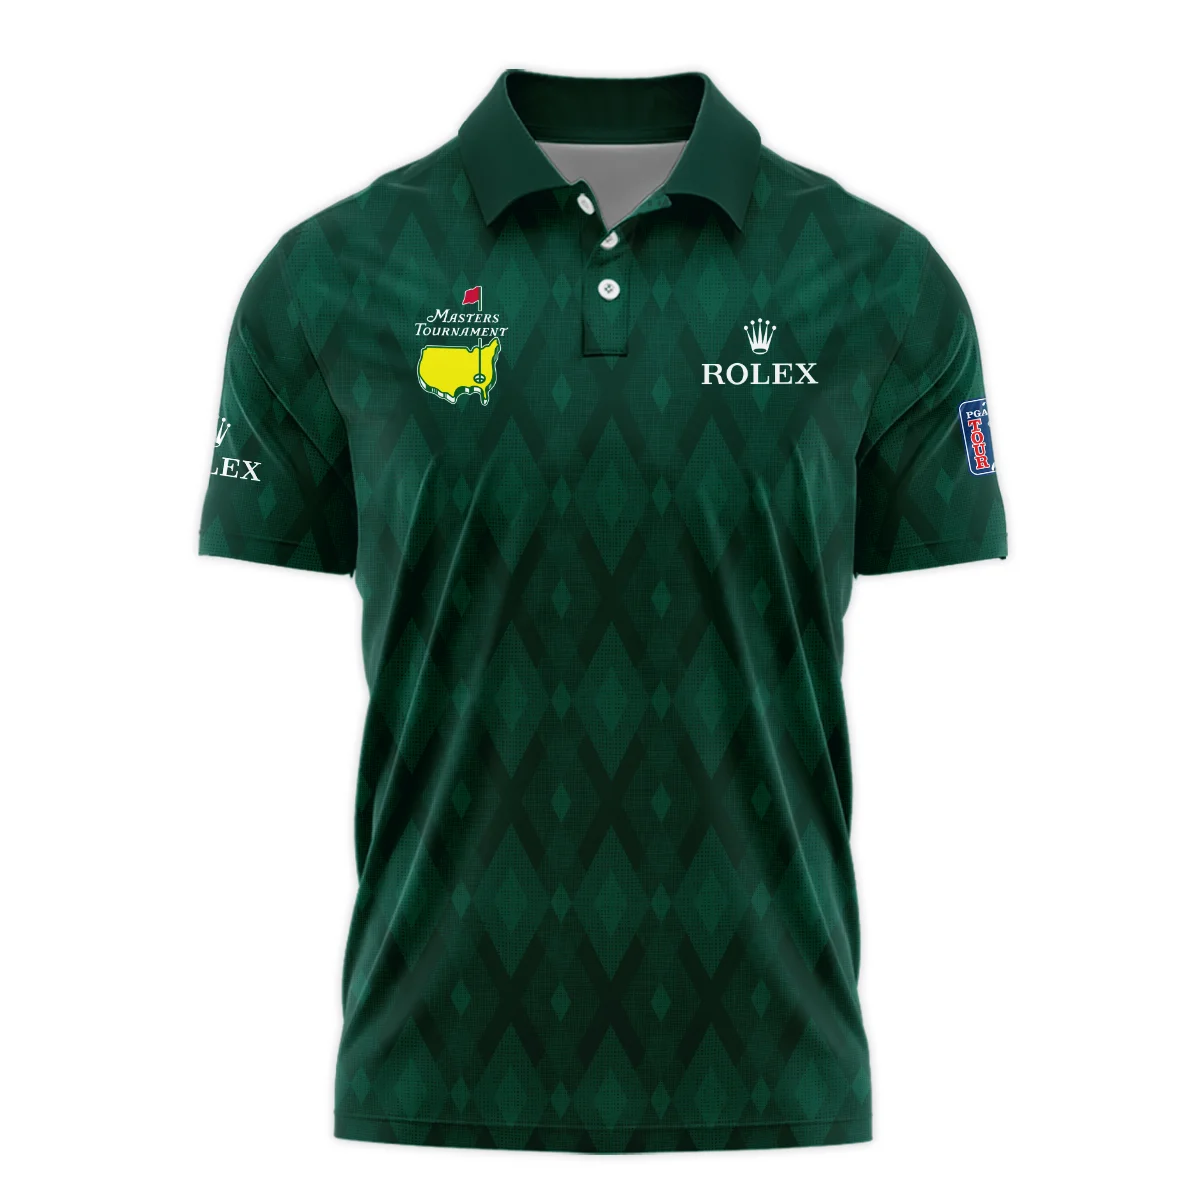 Green Fabric Ikat Diamond pattern Masters Tournament Rolex Polo Shirt Style Classic Polo Shirt For Men